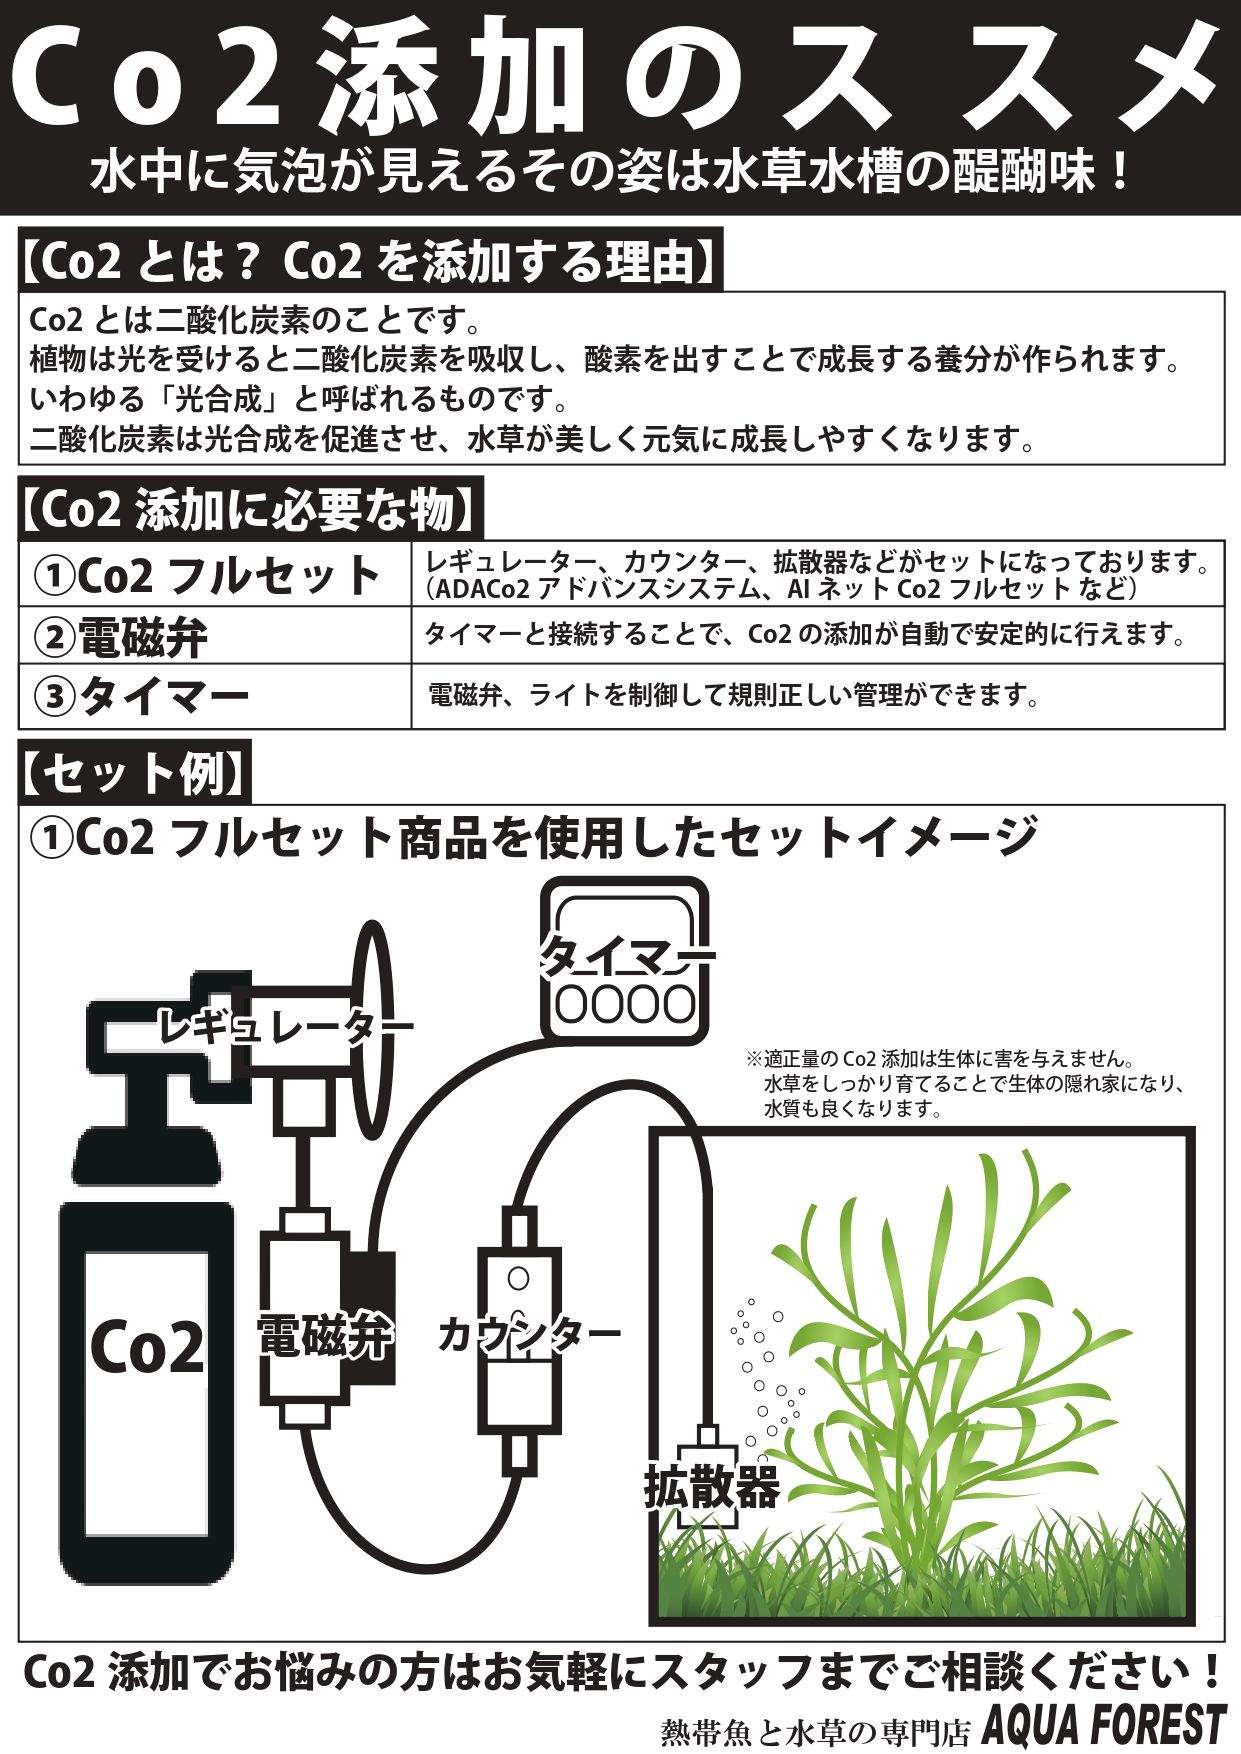 ADA CO2 system 74-YA 二酸化炭素添加セットaquasky